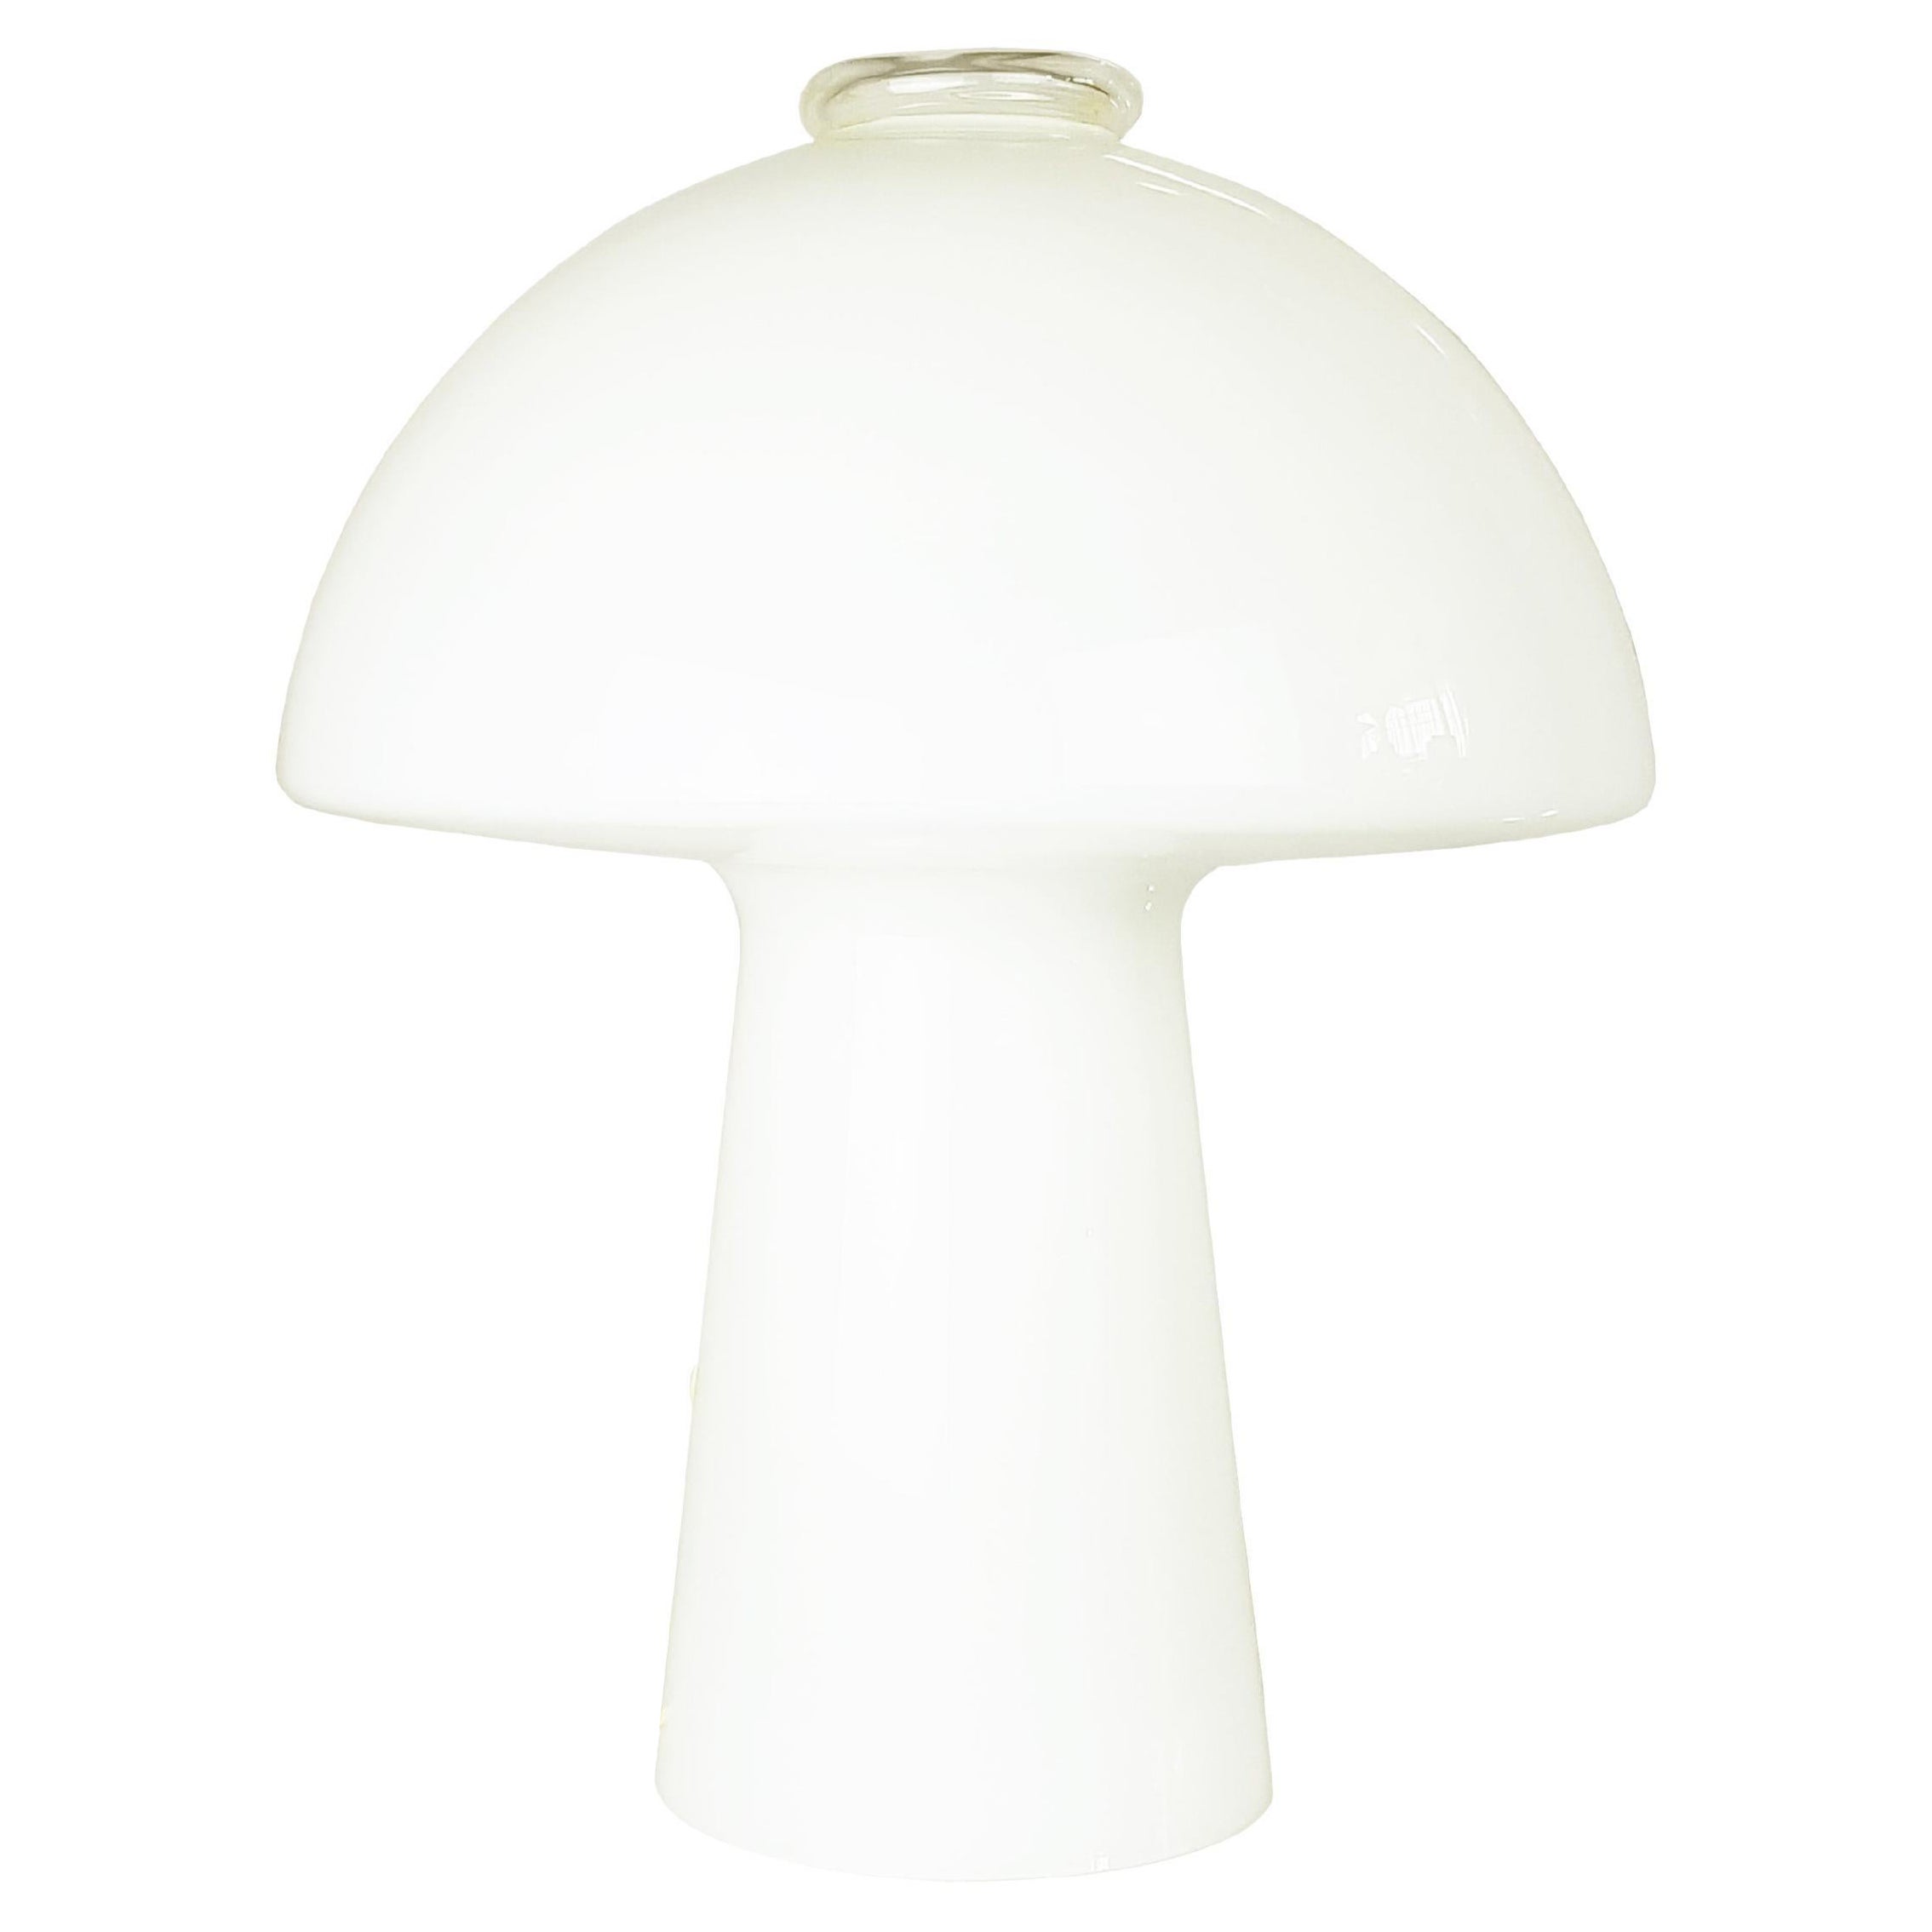 Large Italian White & Clear Murano Glass "Mushroom" Table Lamp